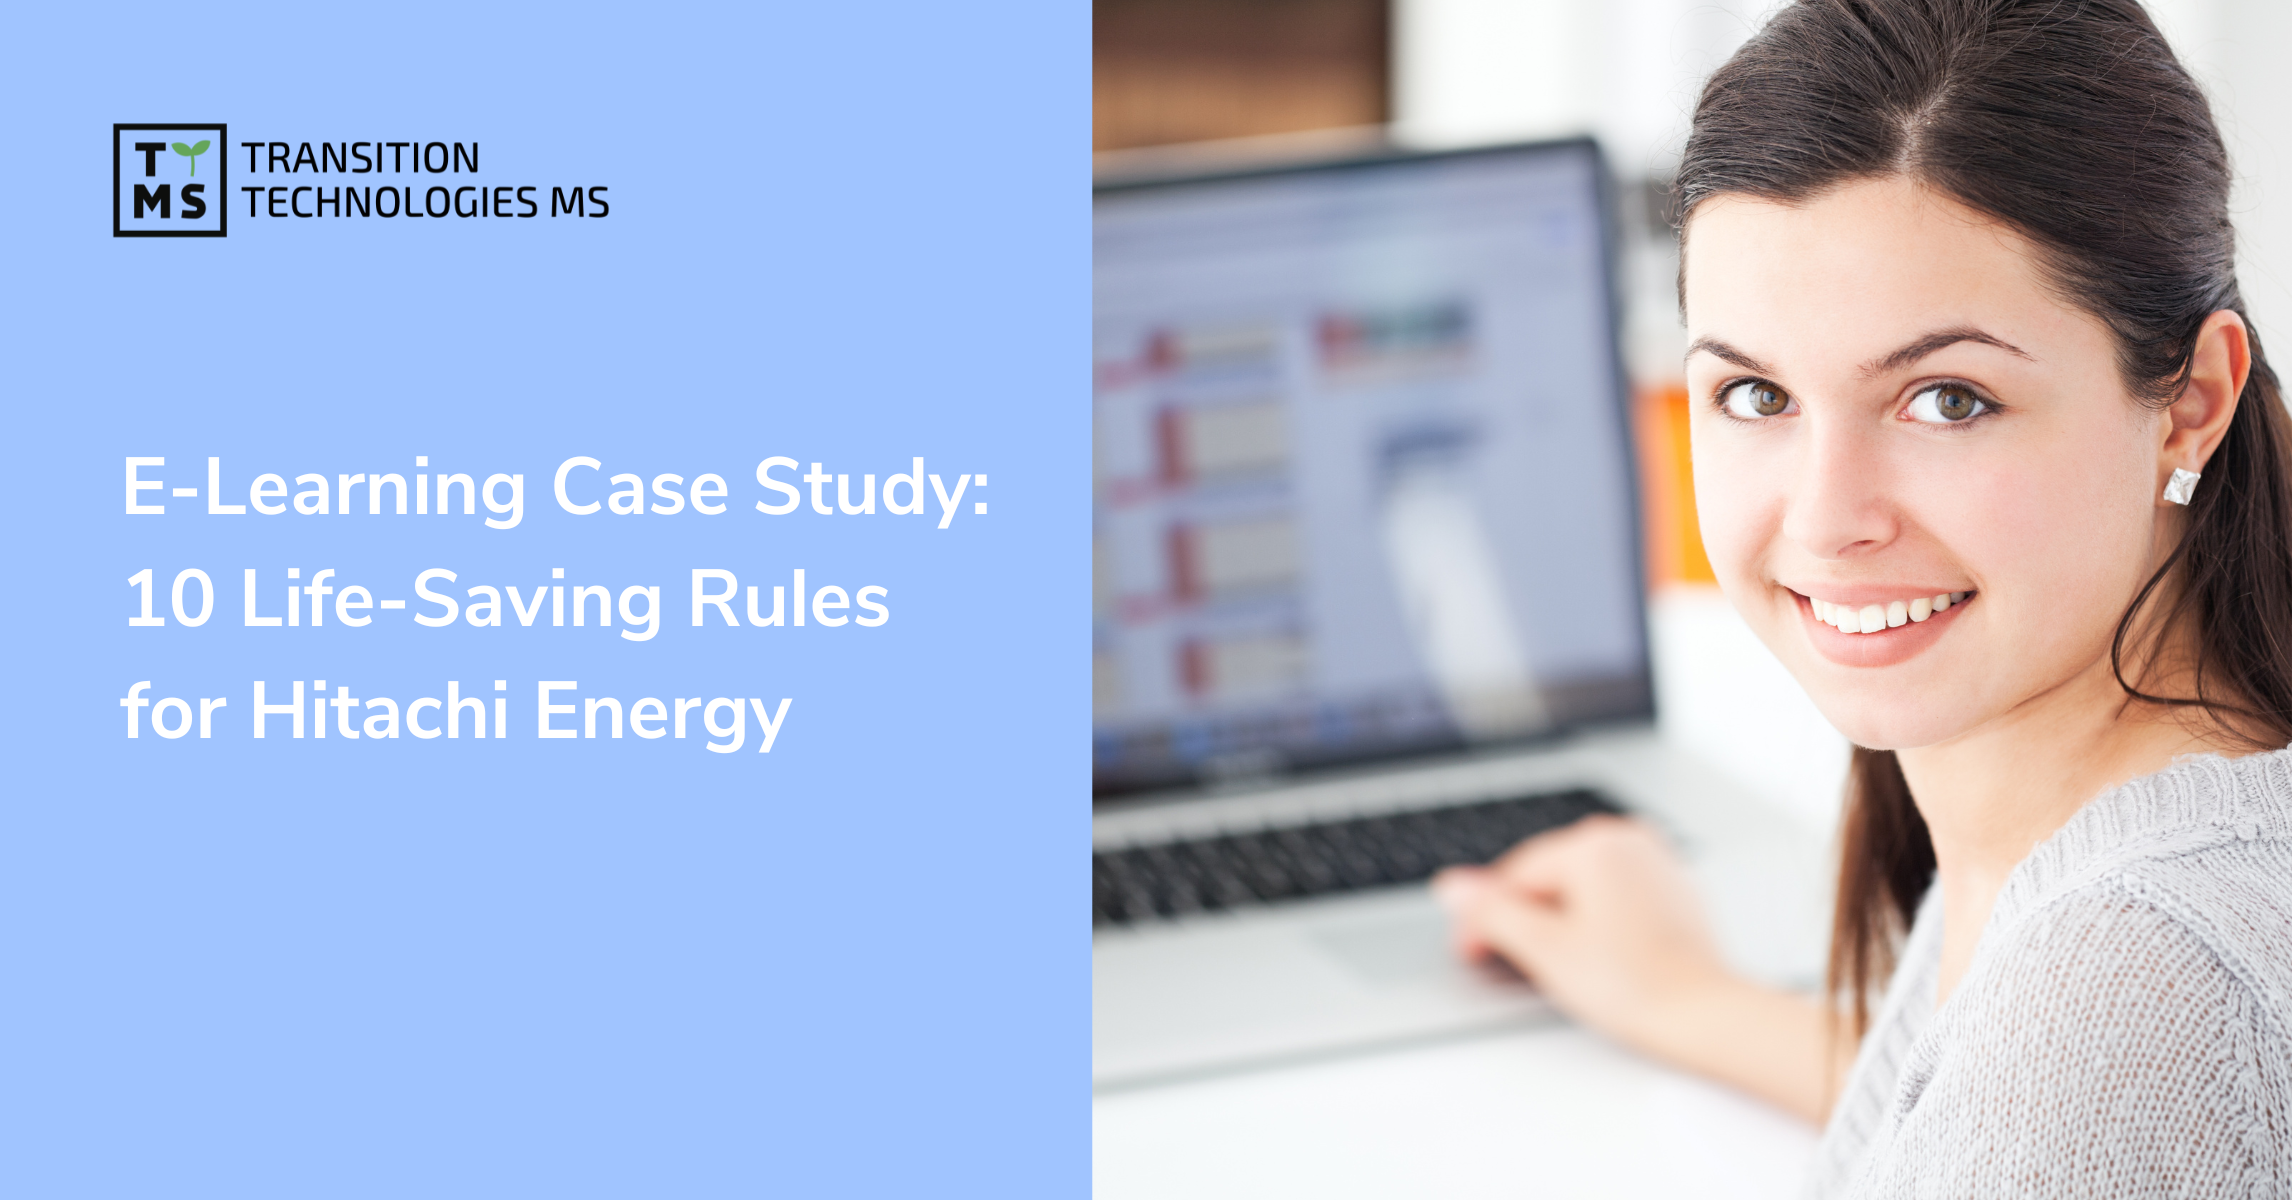 E-Learning Case Study: 10 Life-Saving Rules for Hitachi Energy